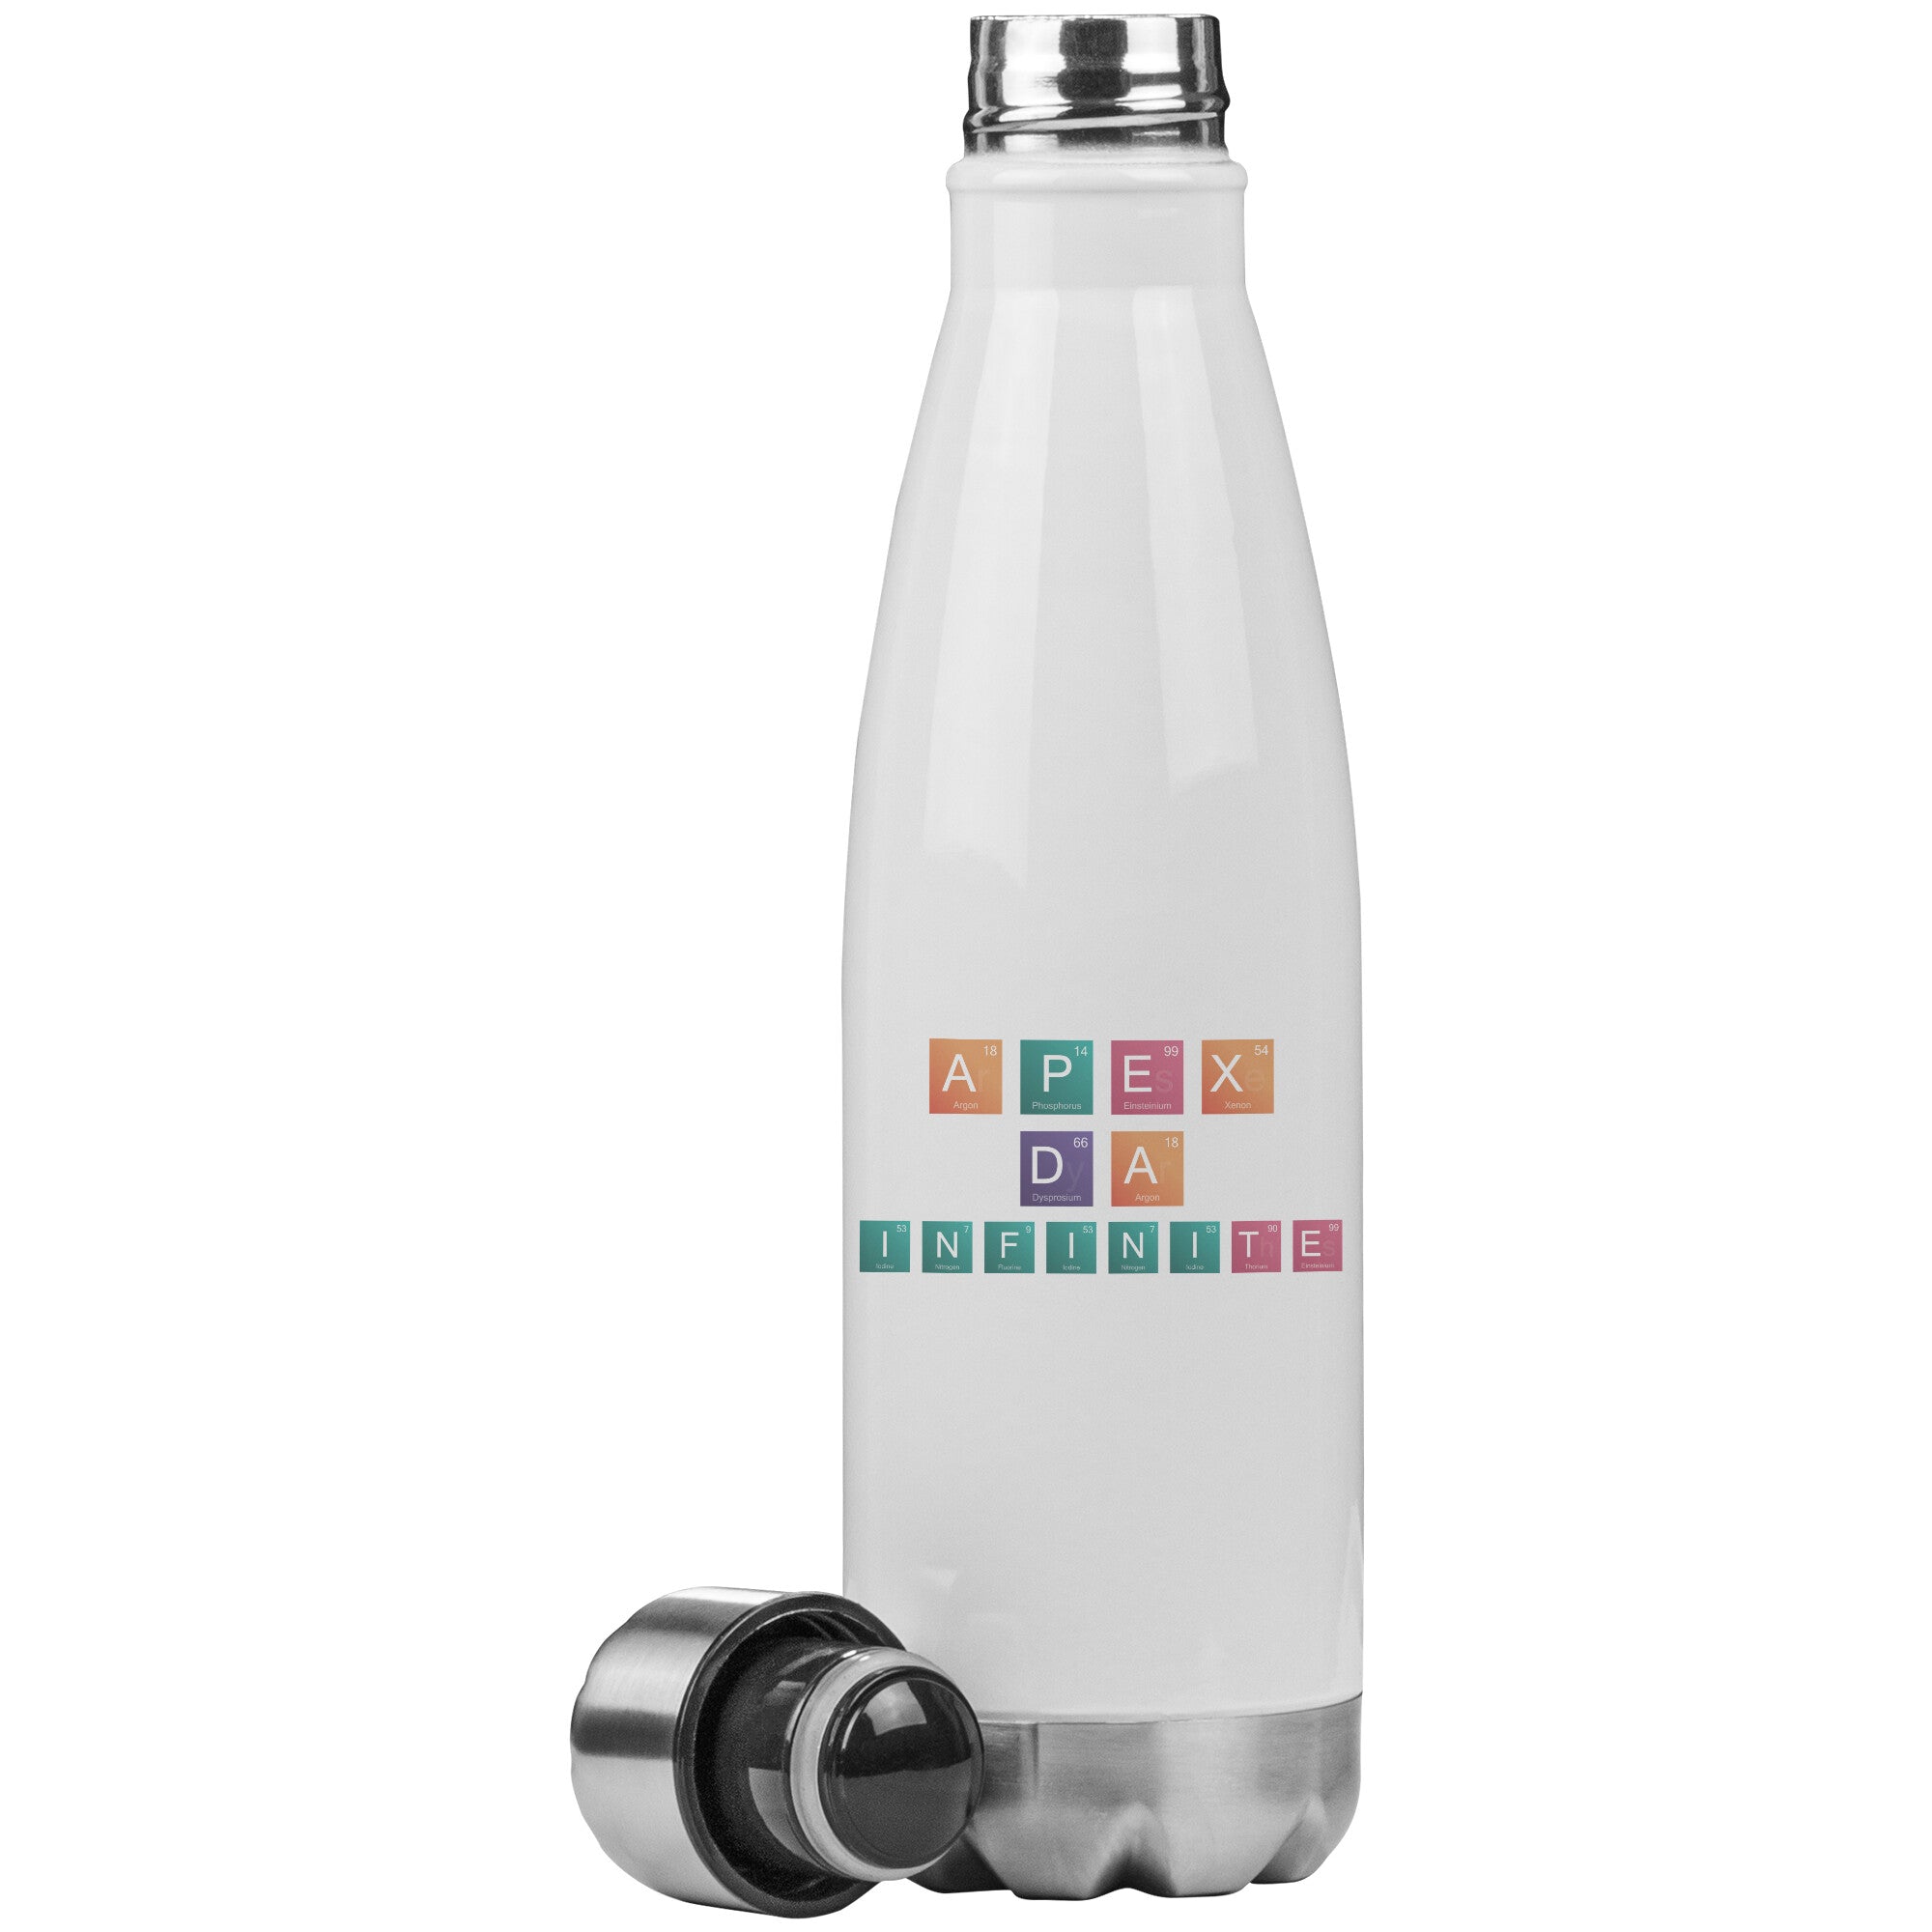 Apex Da Infinite 20oz Insulated Water Bottle